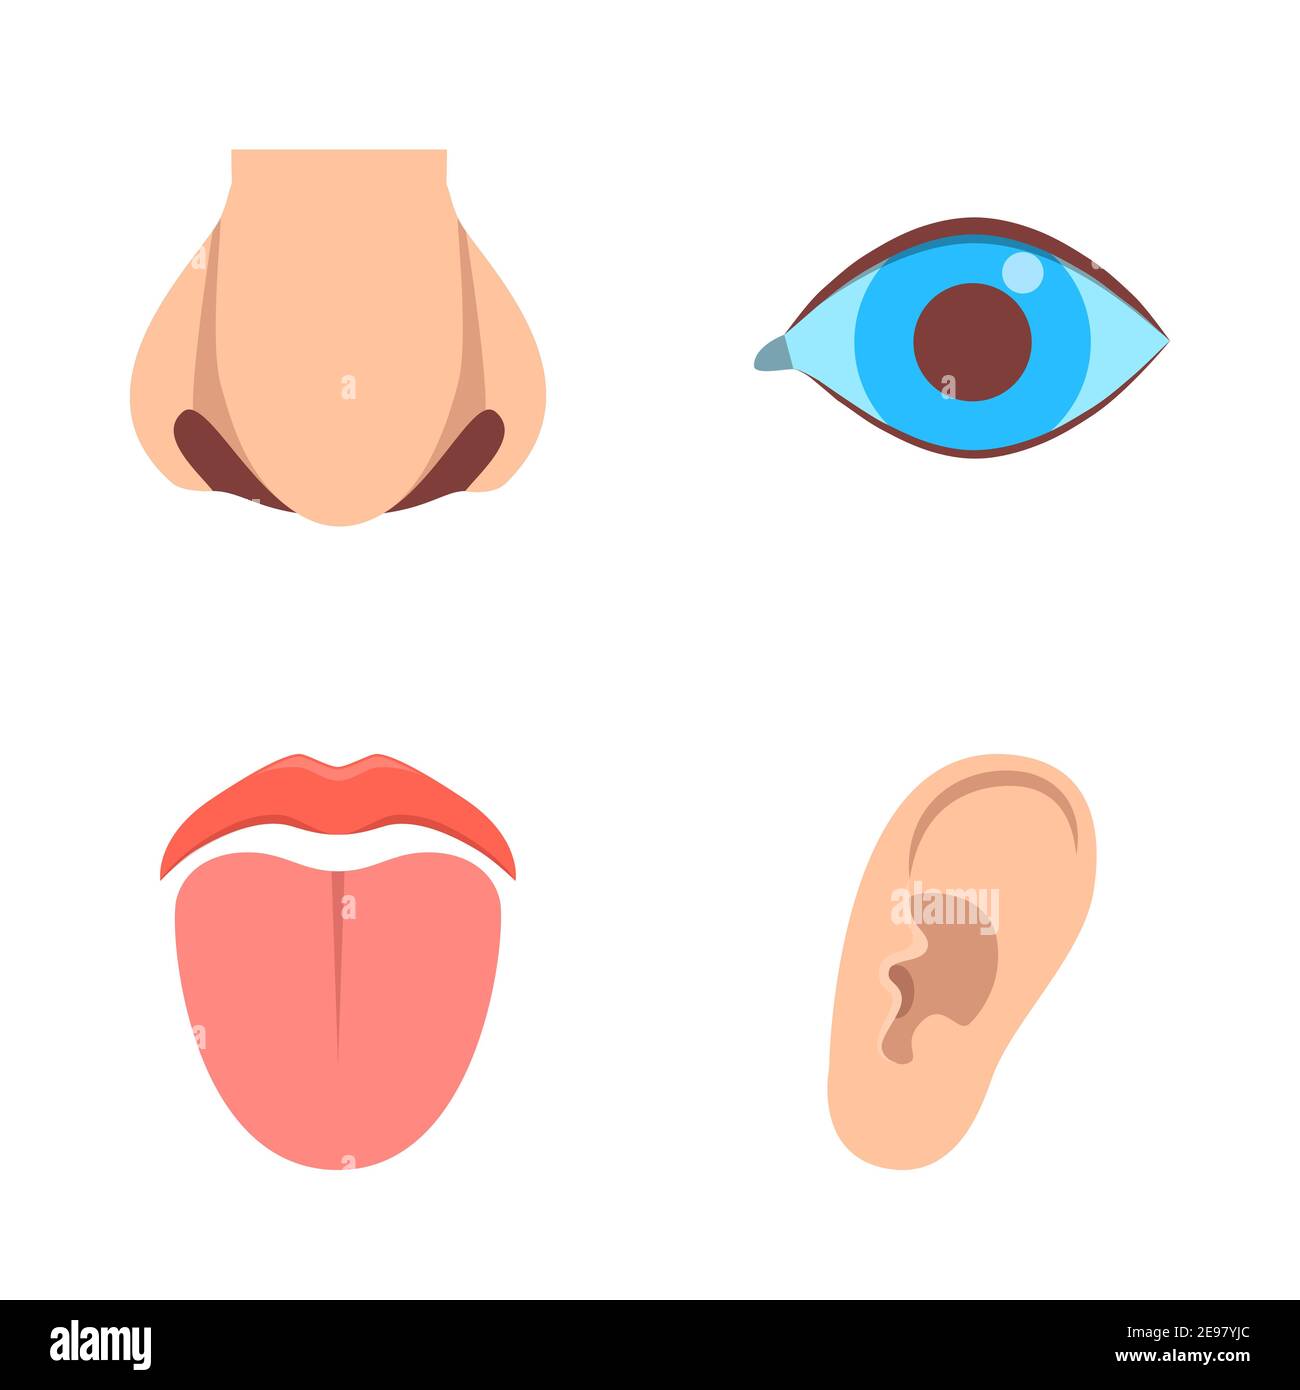 Sense organ icons set in flat style. Human perception elements - vision, hearing, taste, smell. Vector illustration. Stock Vector